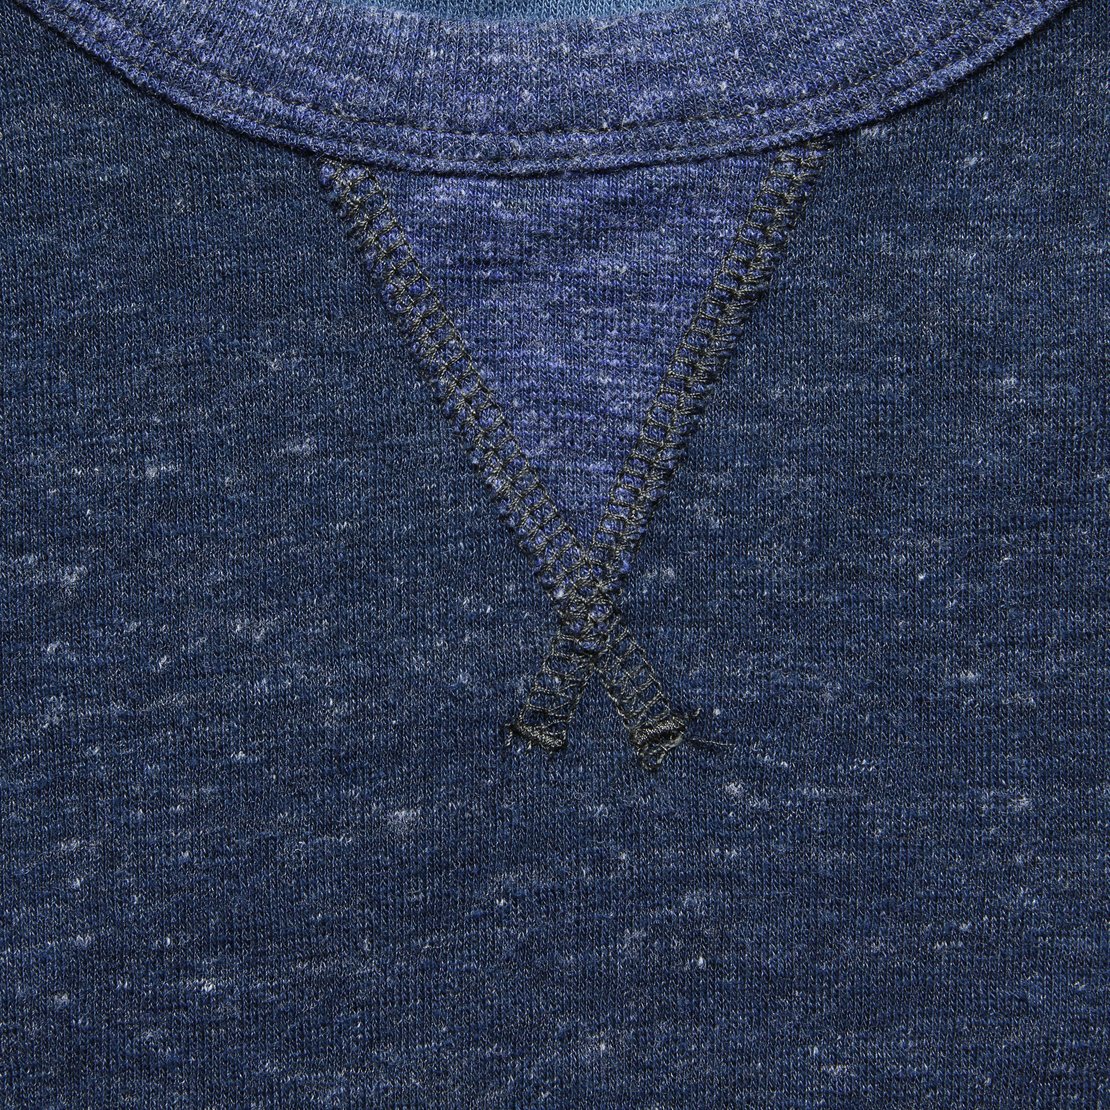 Dual Knit Crew Sweatshirt - Navy - Faherty - STAG Provisions - Tops - Fleece / Sweatshirt